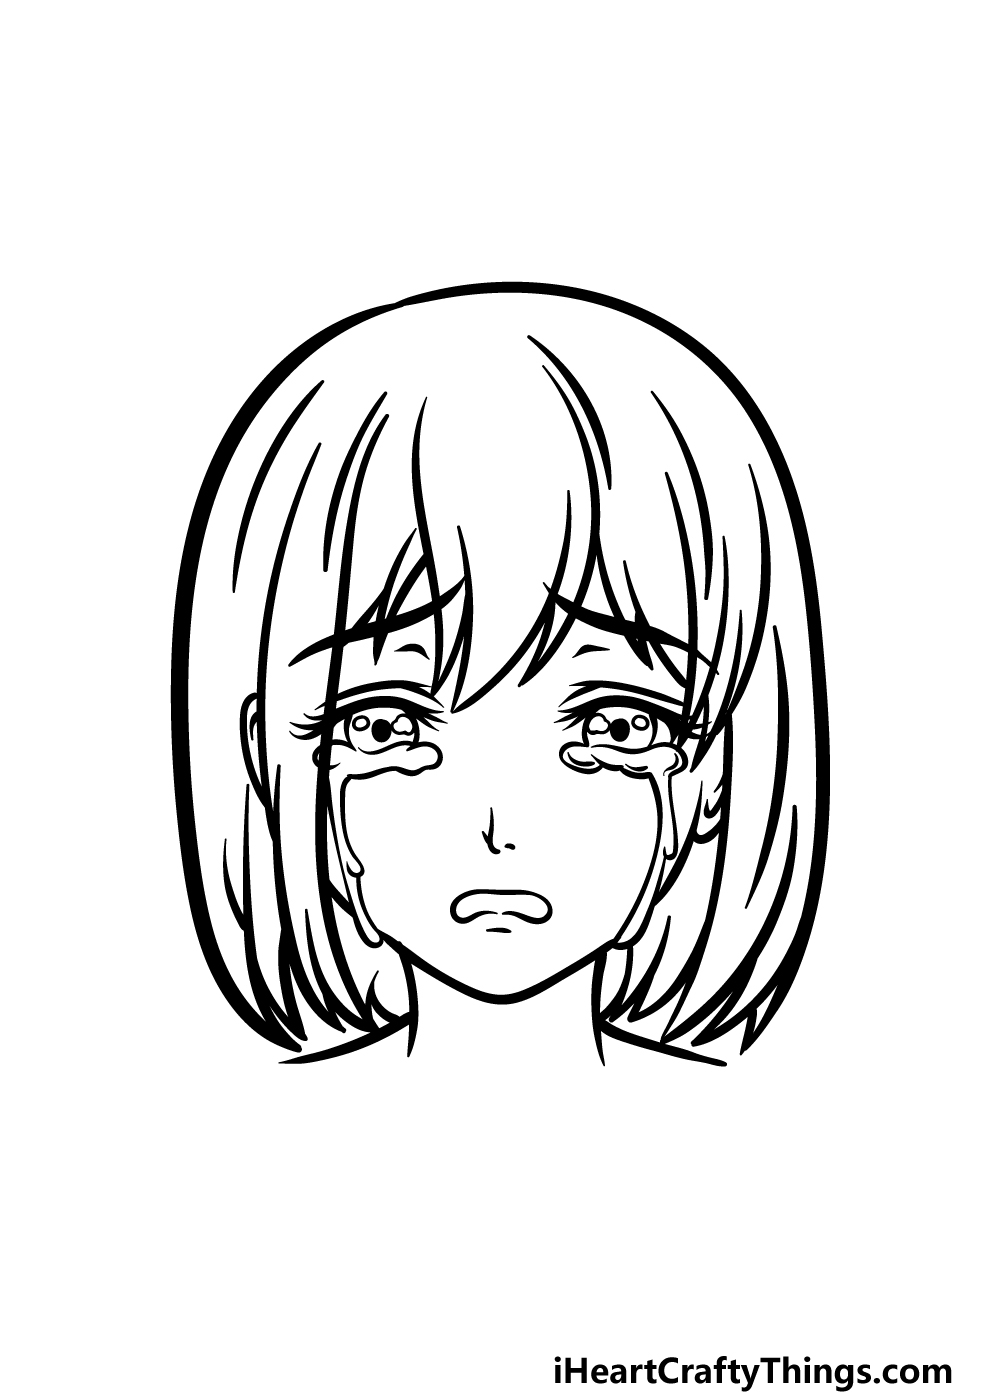 Sad Anime Drawing - How To Draw A Sad Anime Step By Step